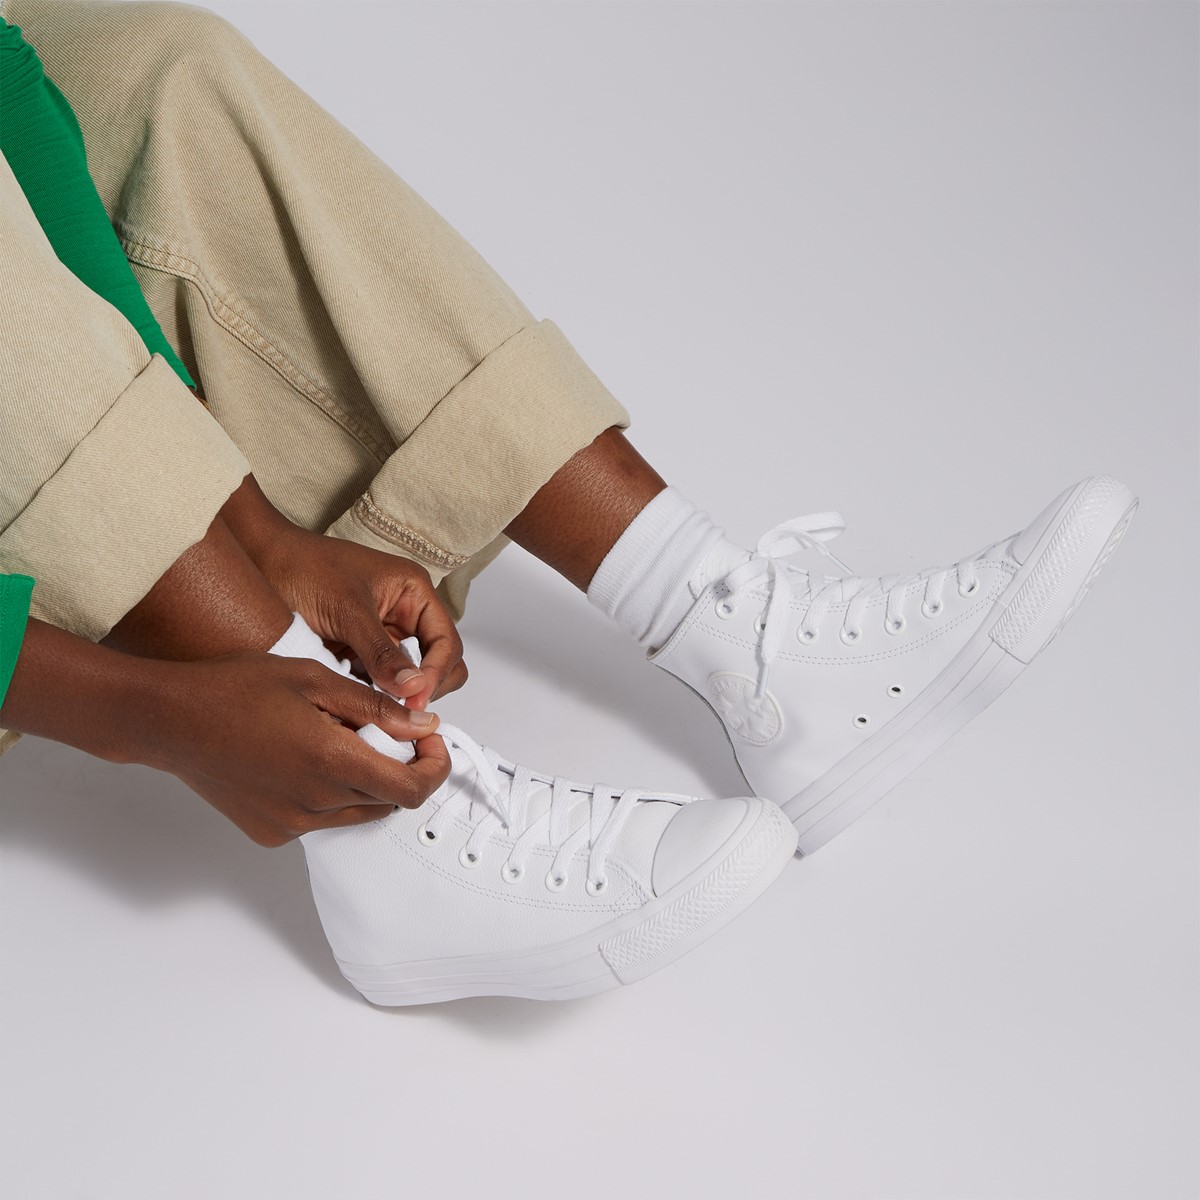 kravle Tick udskille Chuck Taylor All Star Hi Leather Sneakers in Mono White | Little Burgundy